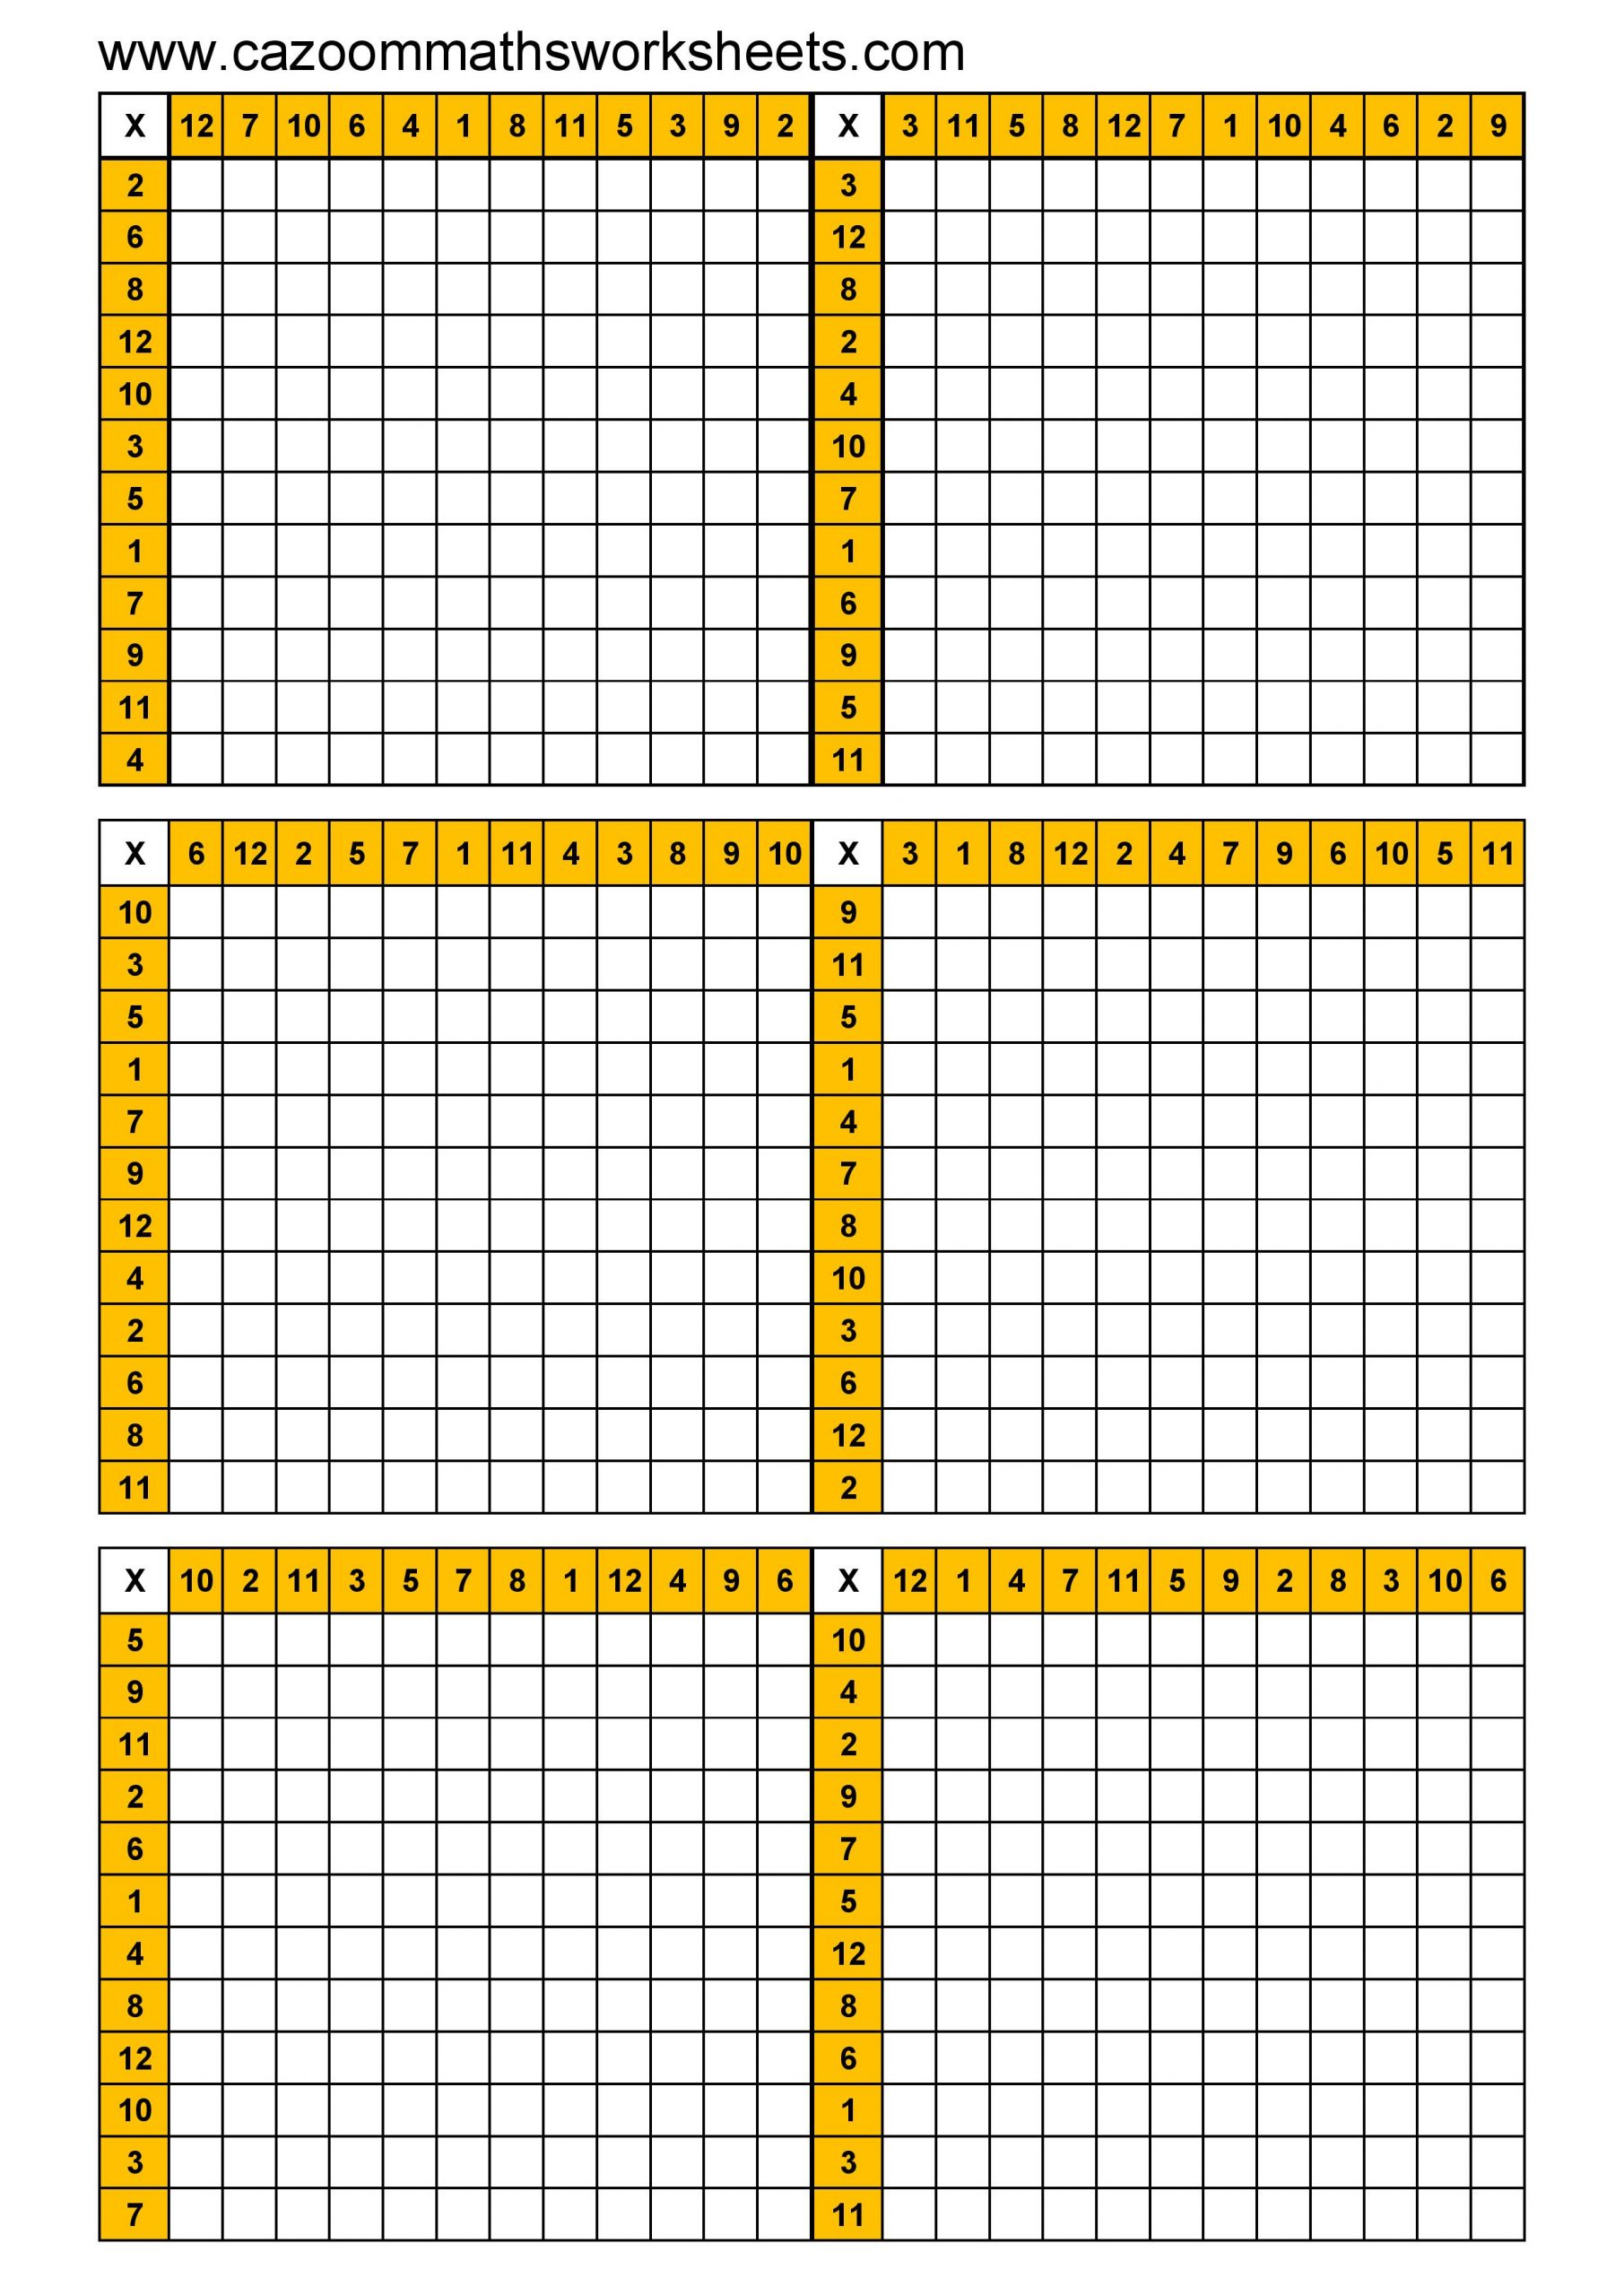 multiplication table 12x12 printable